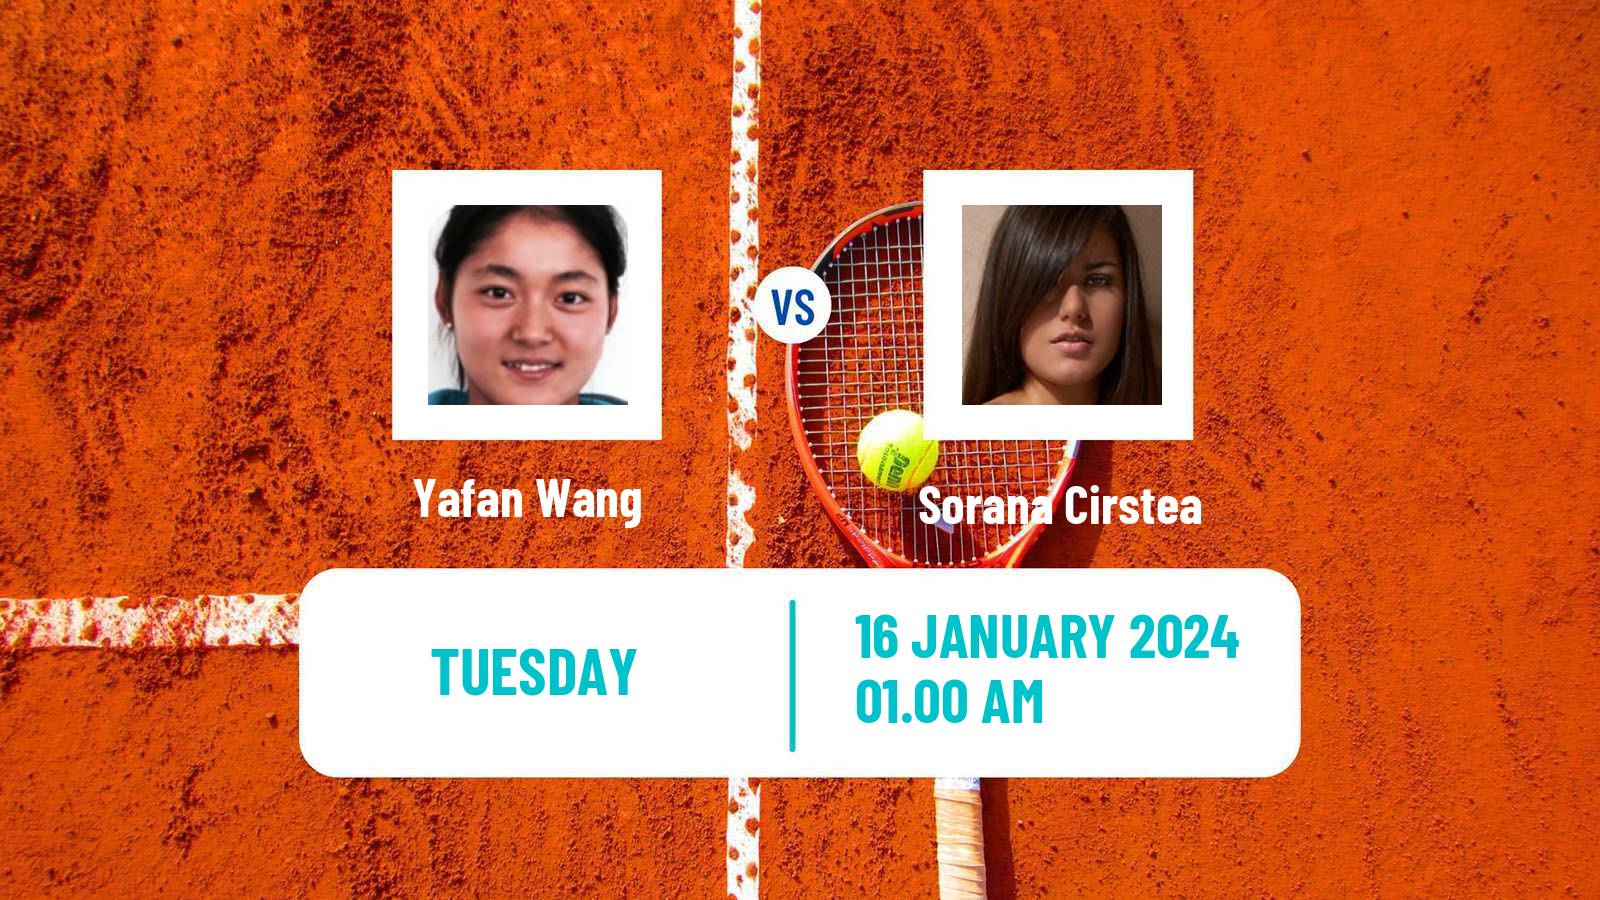 Tennis WTA Australian Open Yafan Wang - Sorana Cirstea